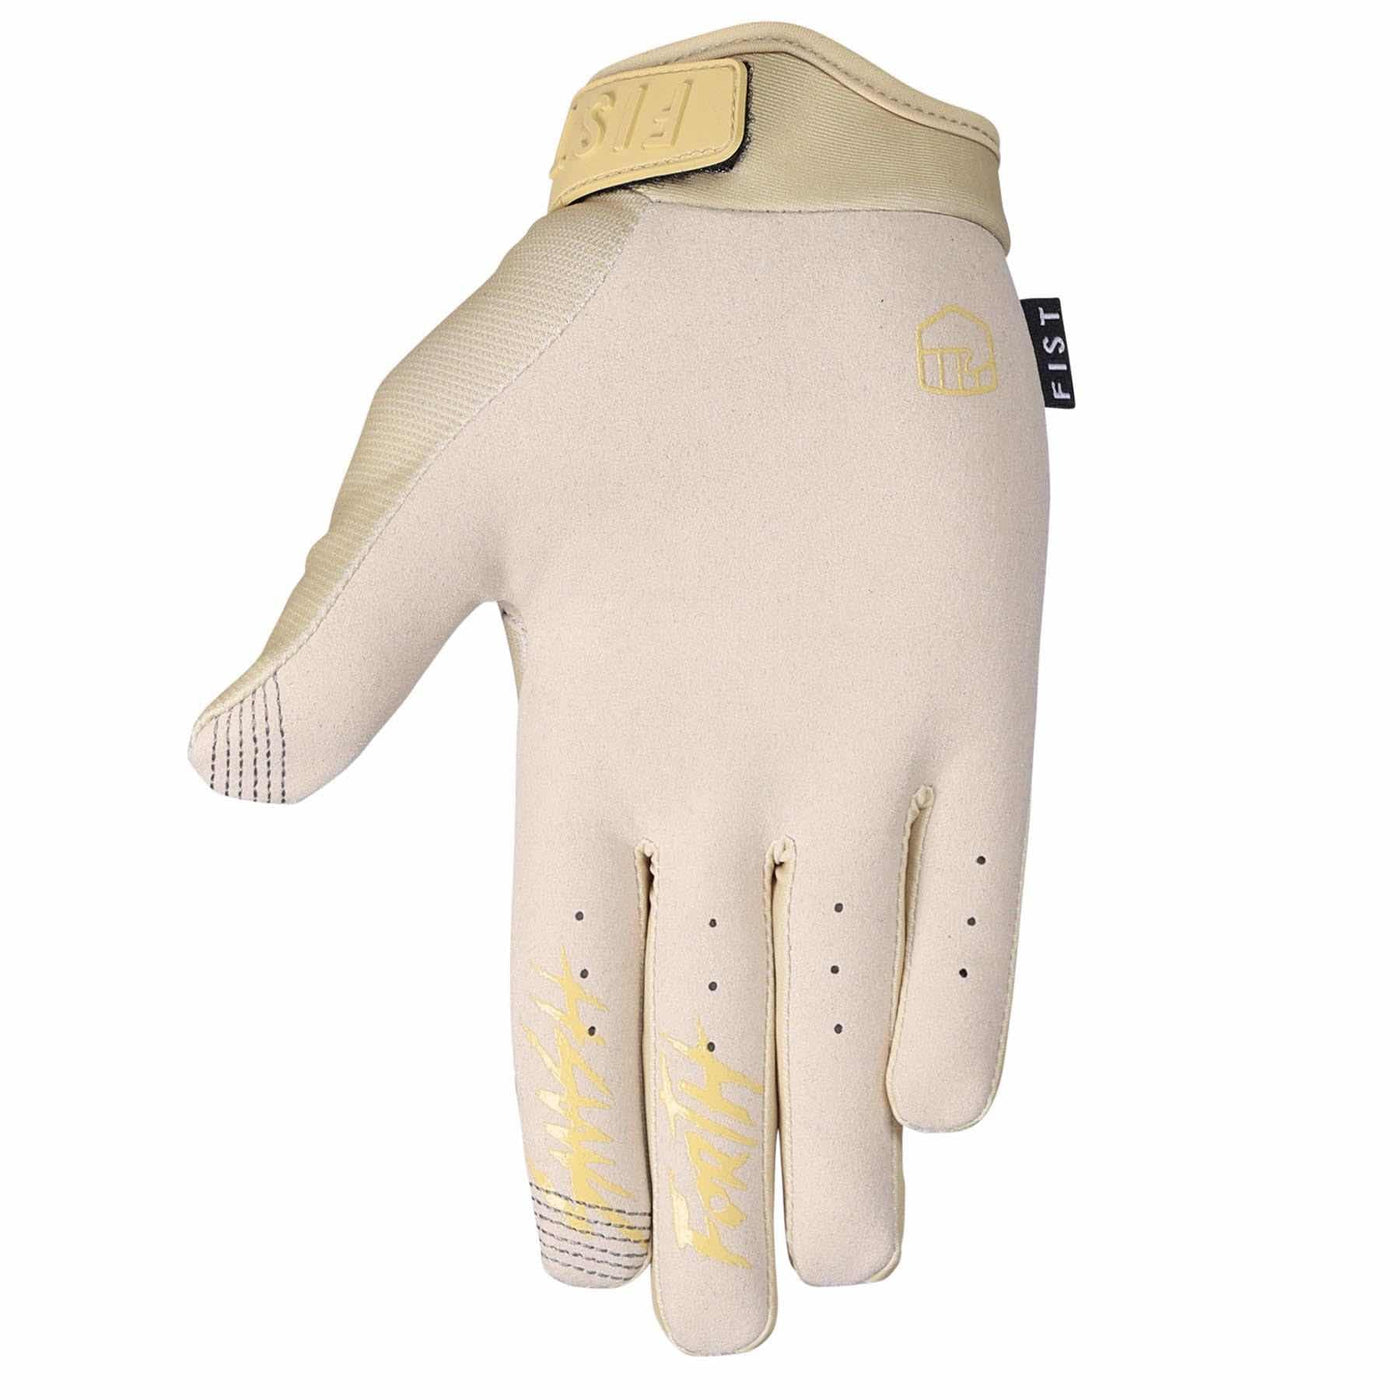 FIST Gloves Stocker - Khaki palm | 8Lines.eu - Next day shipping, Best Offers